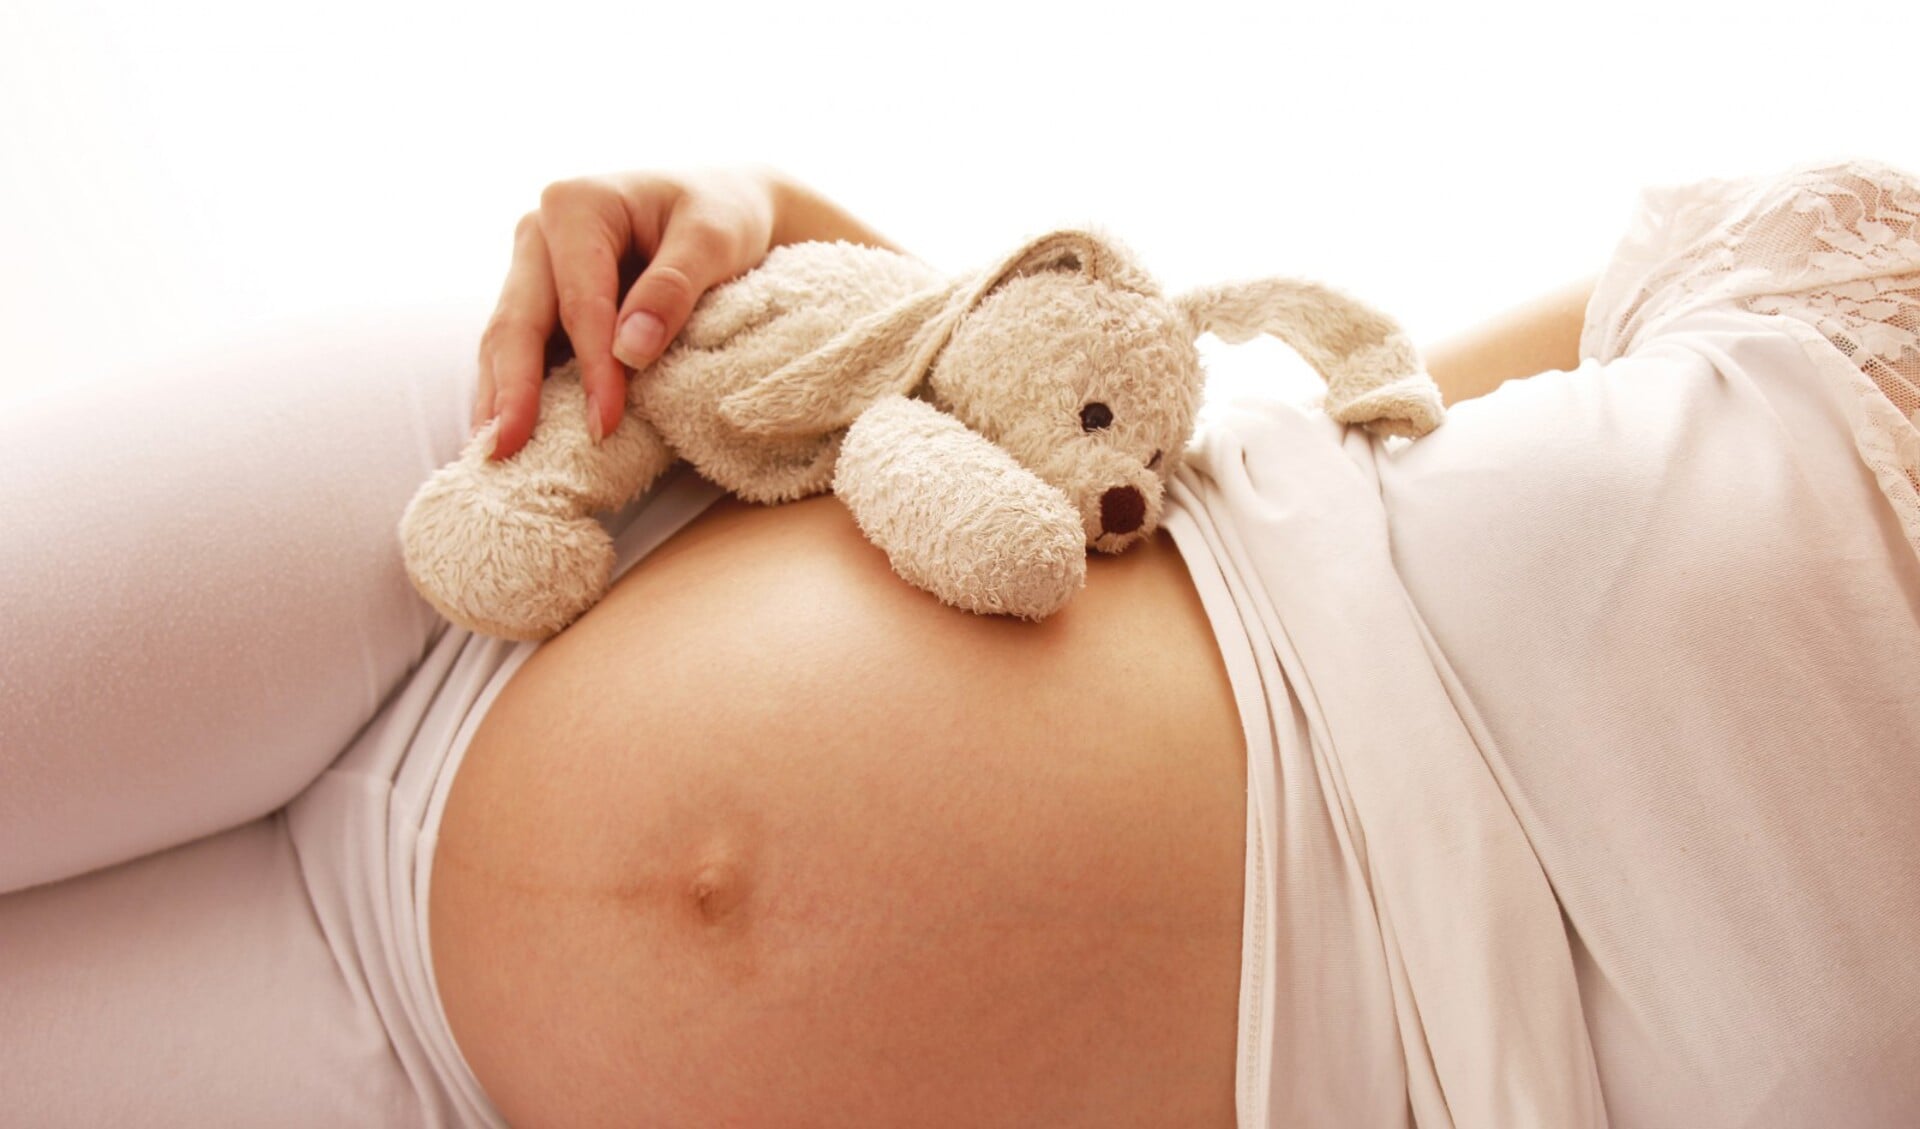 Veilige Start helpt kwetsbare zwangere vrouwen.